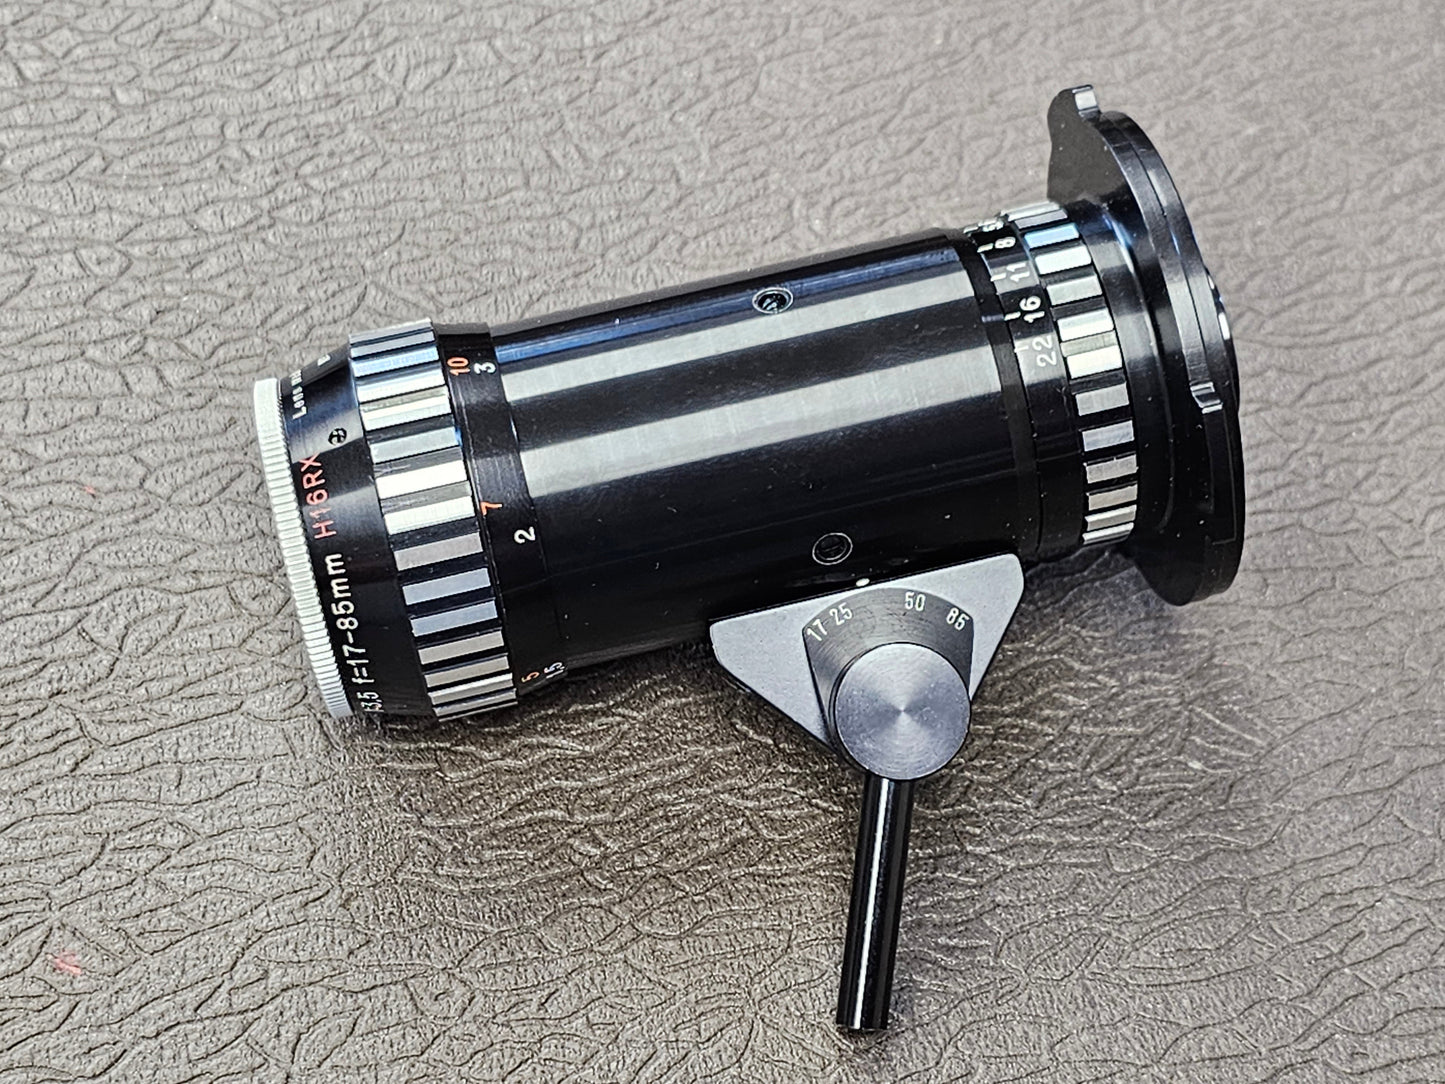 Kern Vario Switar Compact 17-85mm f3.5 H16RX Zoom lens In Bolex Bayonet Mount S# 1121688